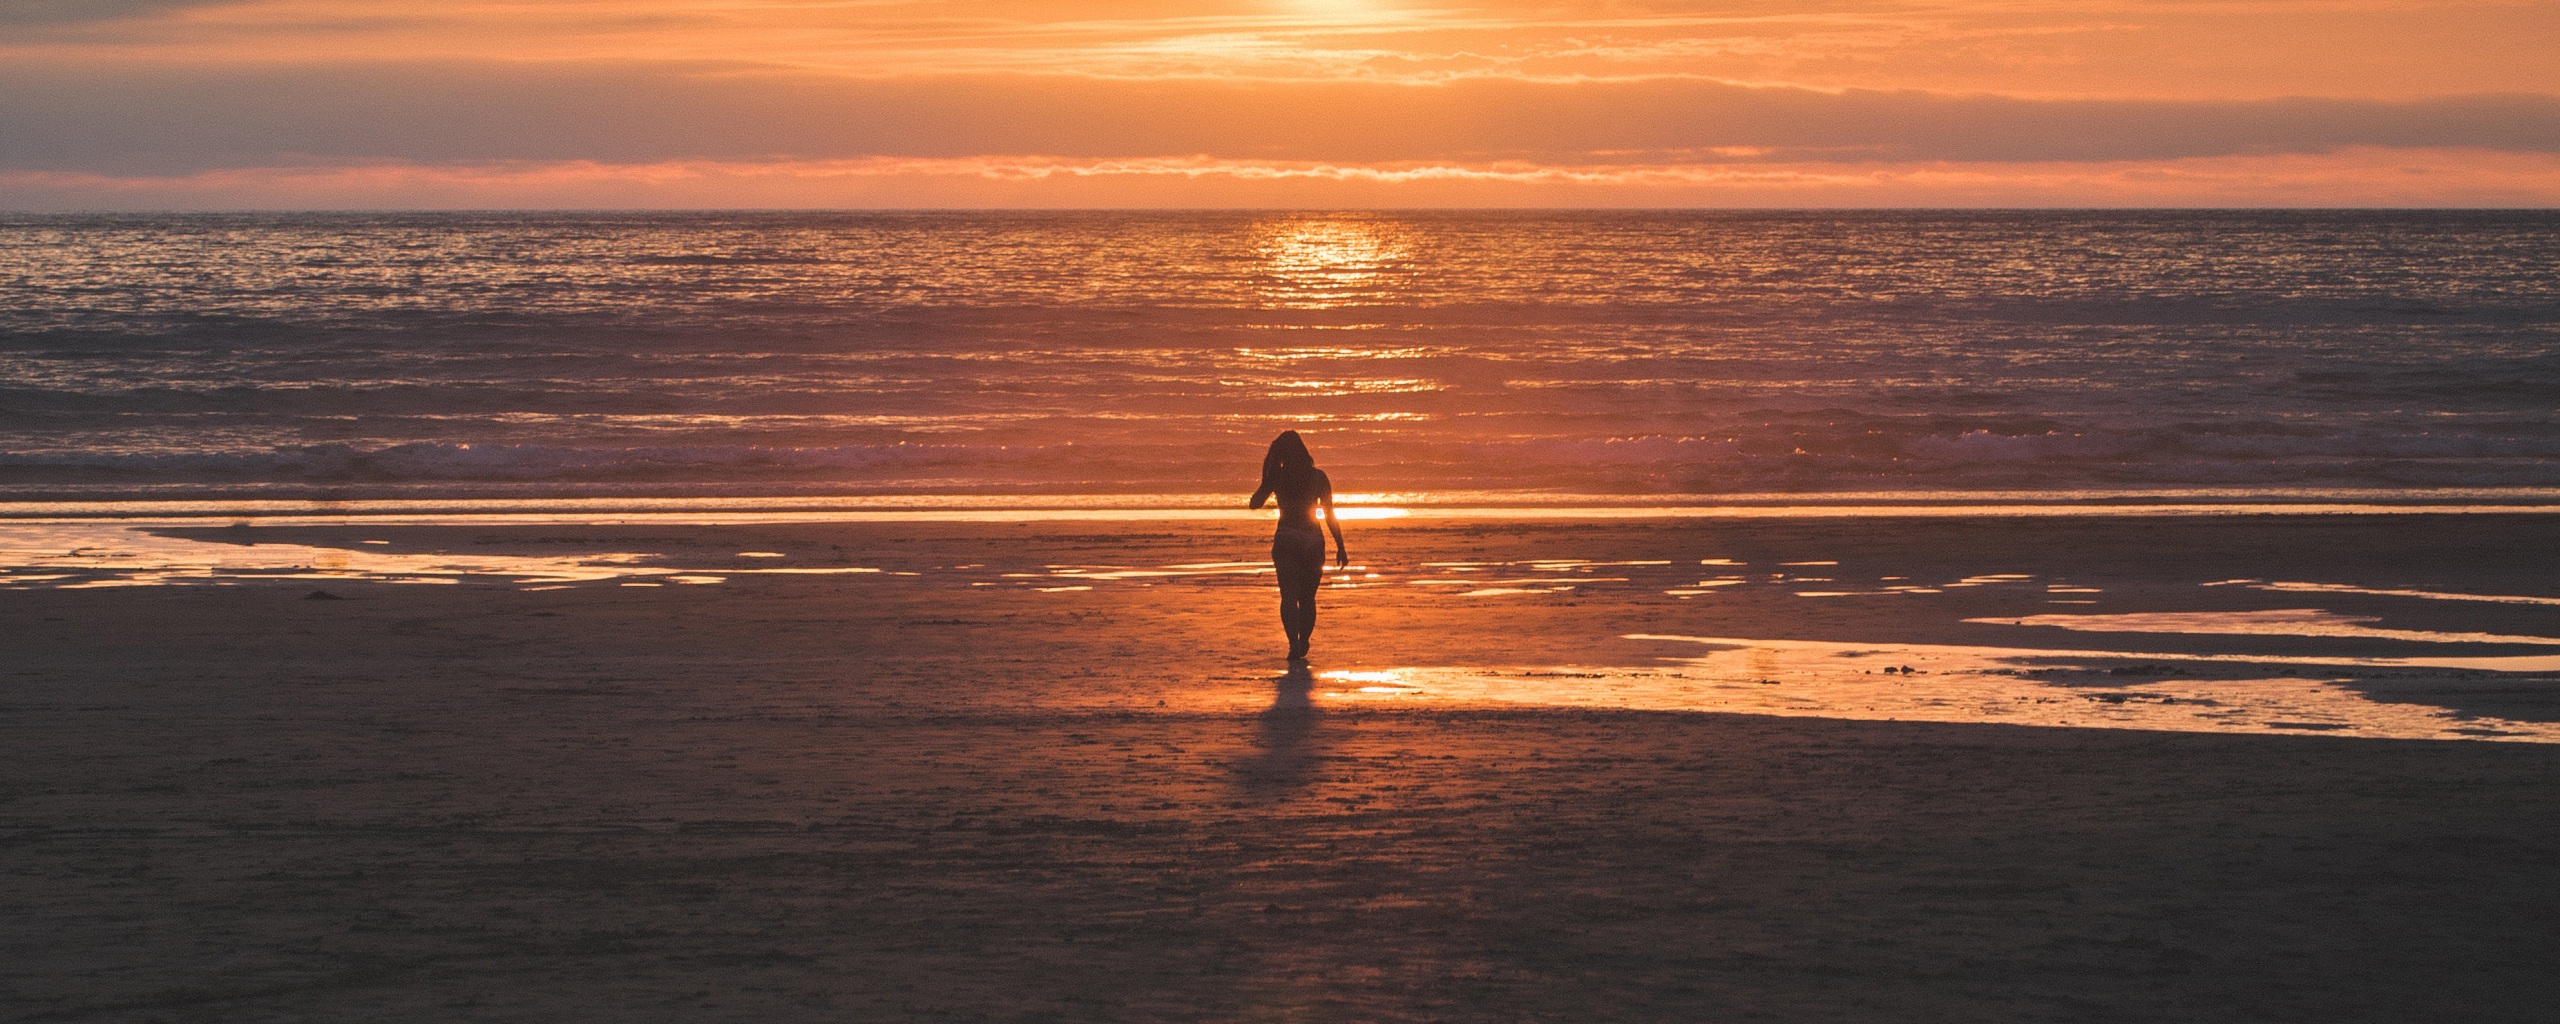 Silhouette Sunset Horizon Lonely Girl 4k - 4k Wallpapers - 40.000+ ipad ...